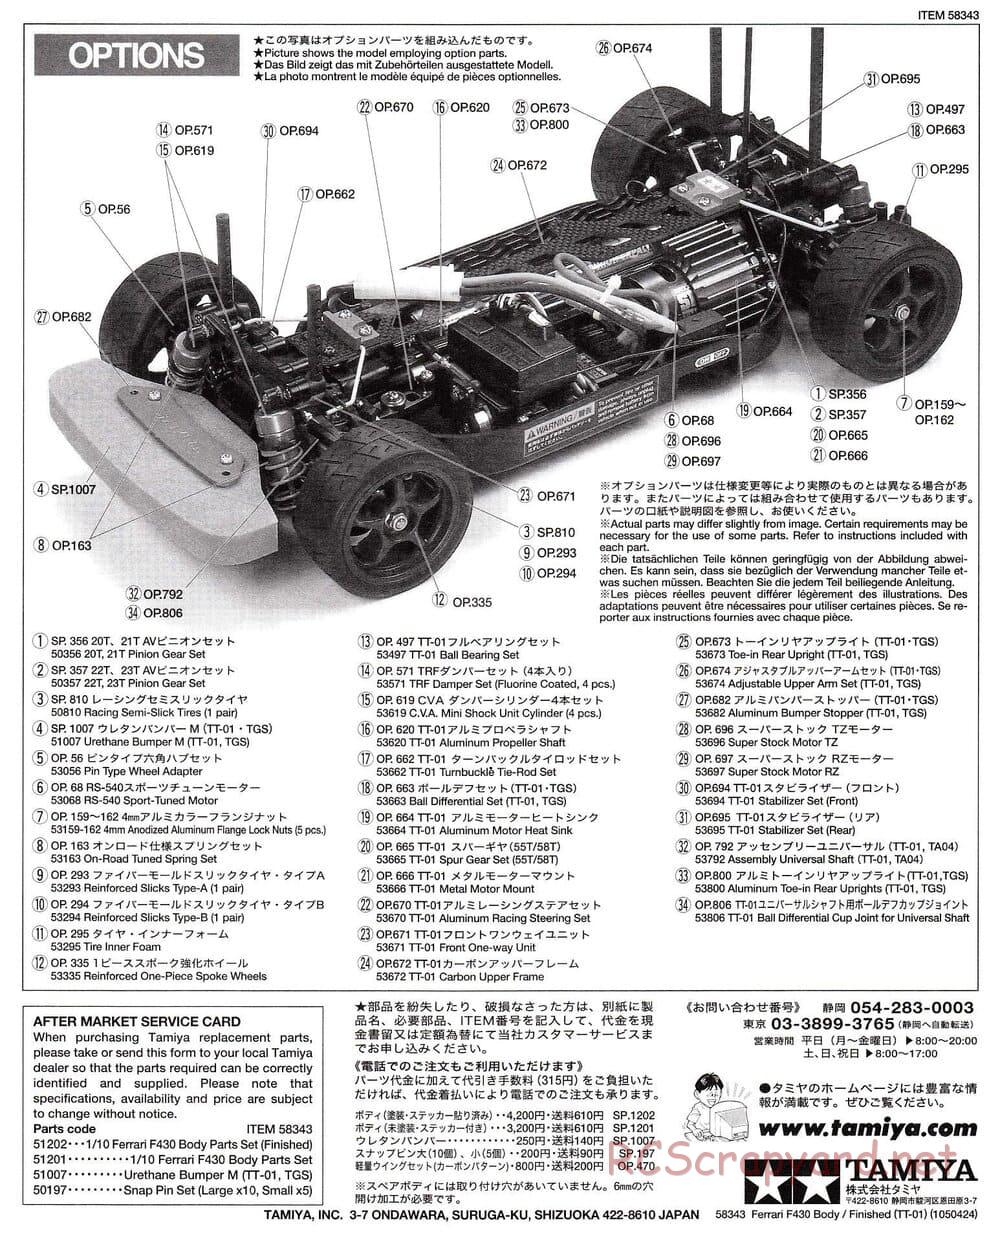 Tamiya - Ferrari F430 - TT-01 Chassis - Body Manual - Page 2